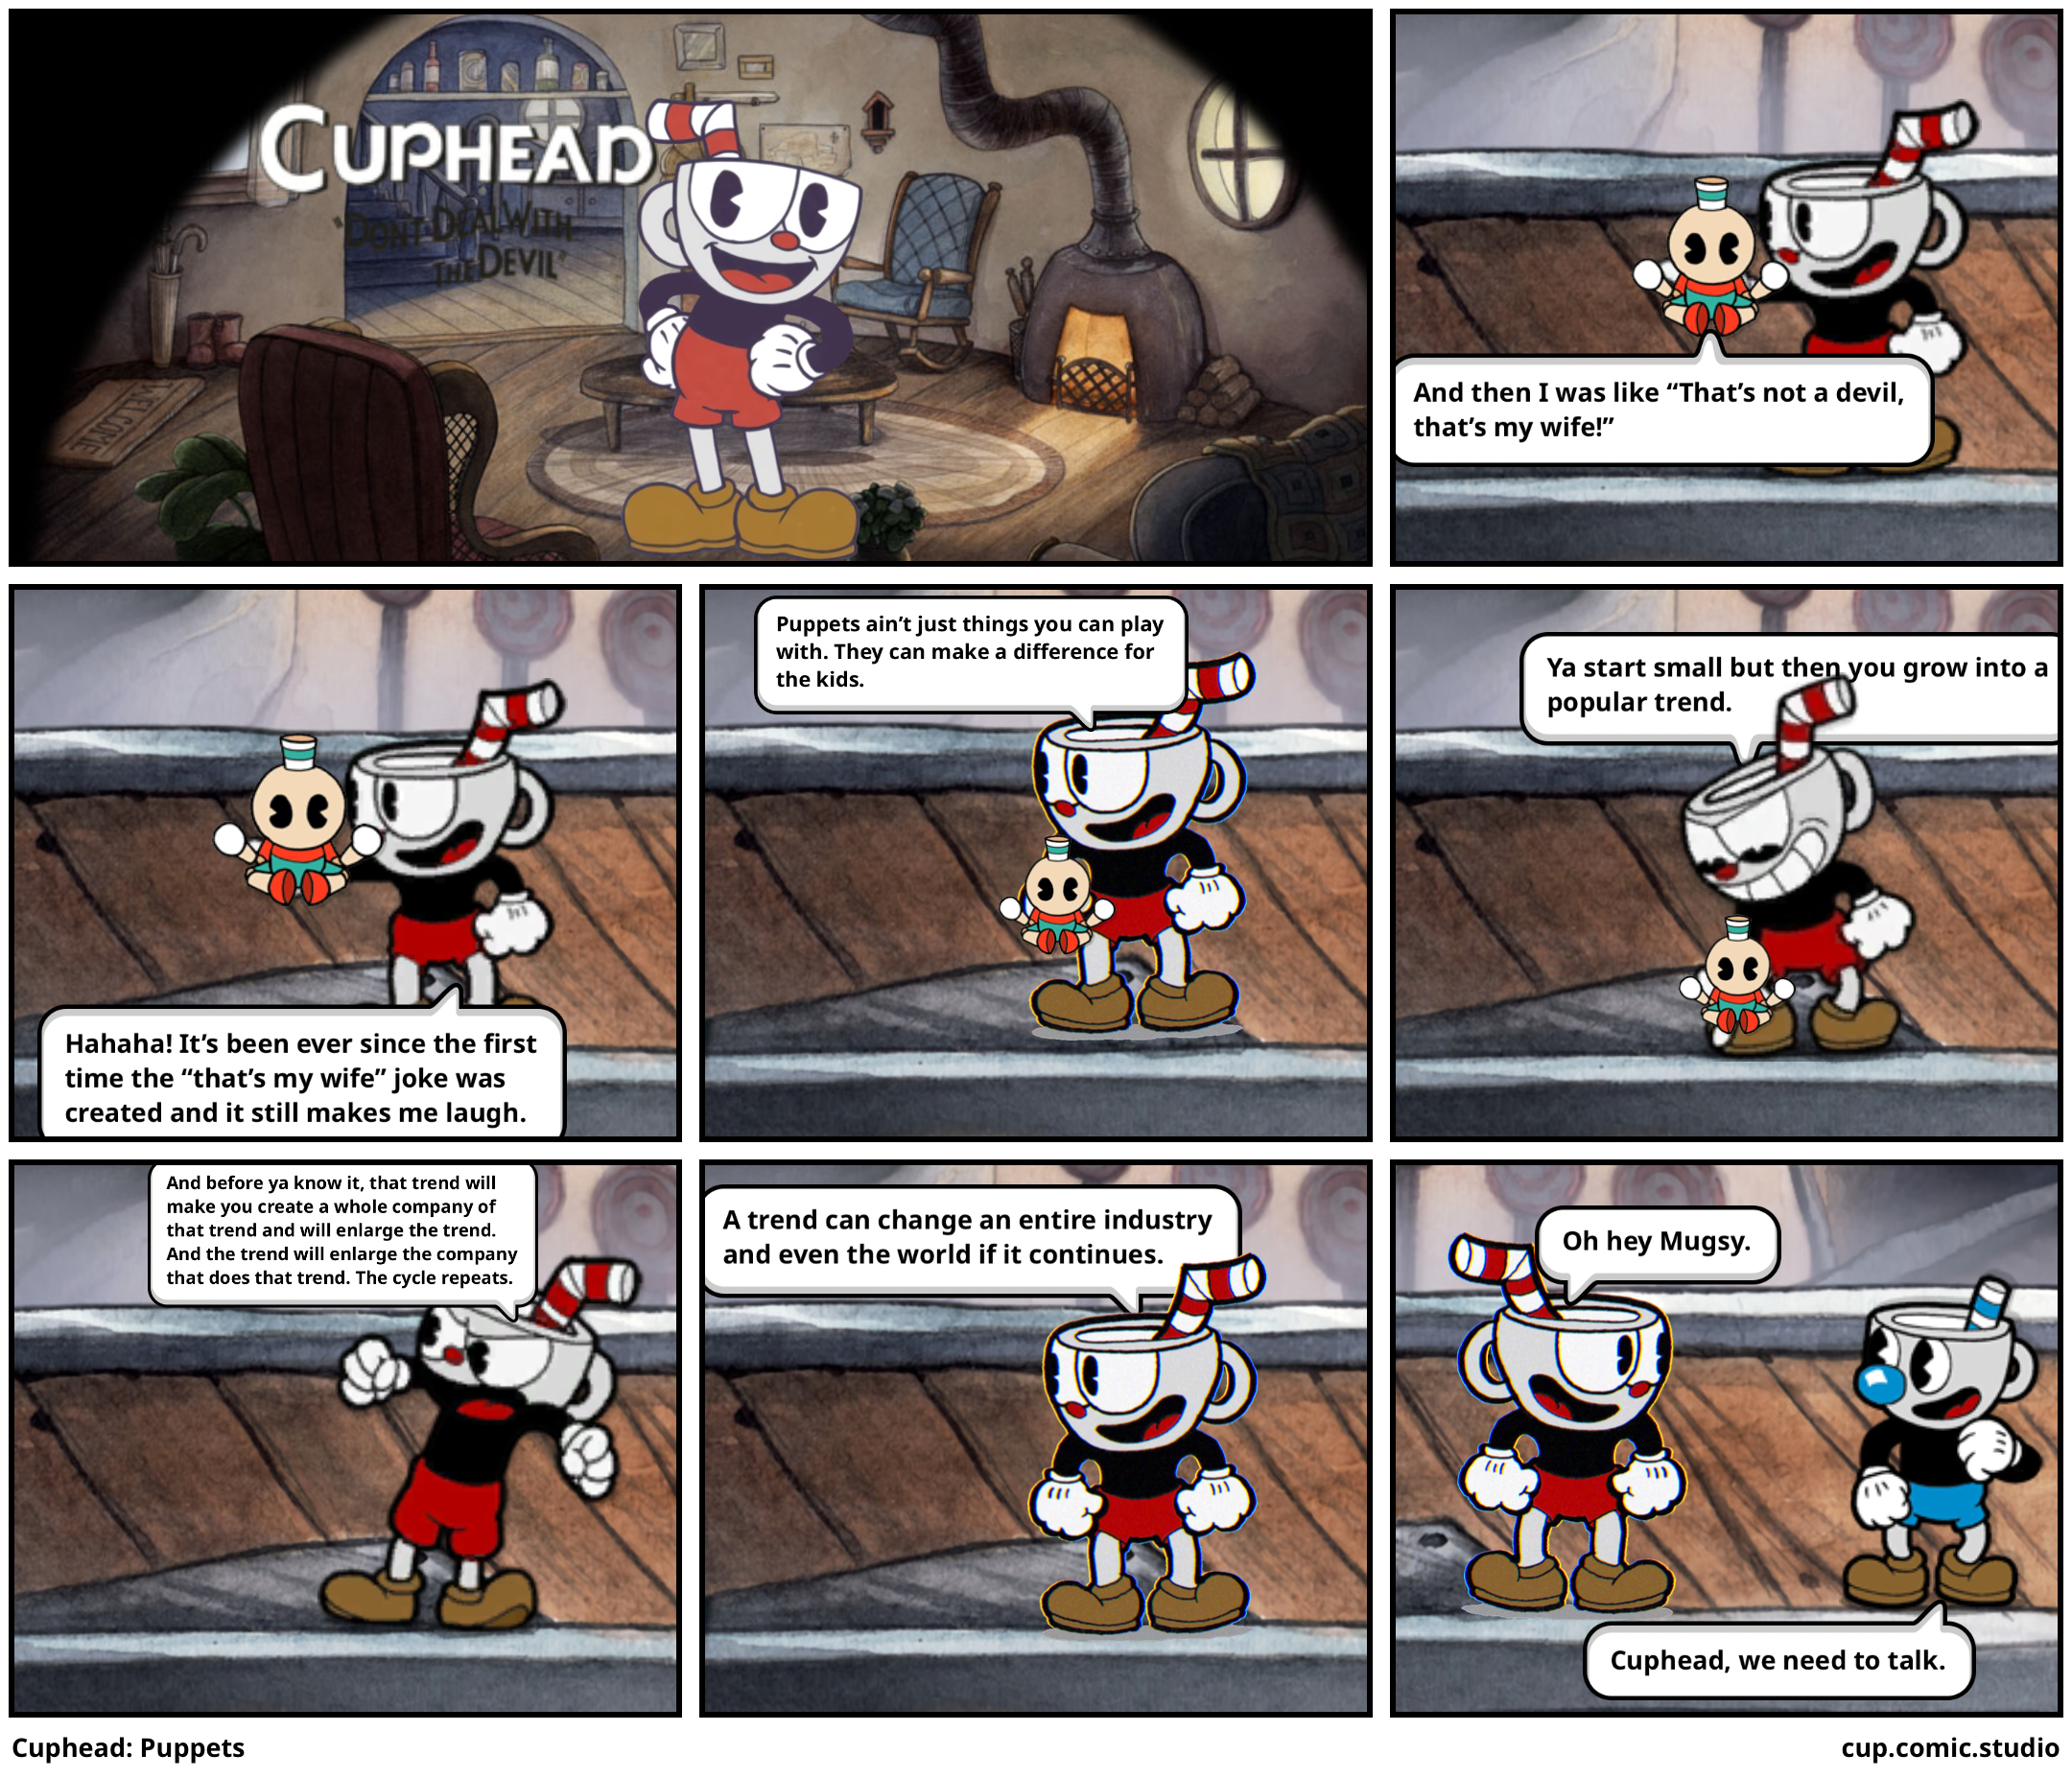 Cuphead: Puppets